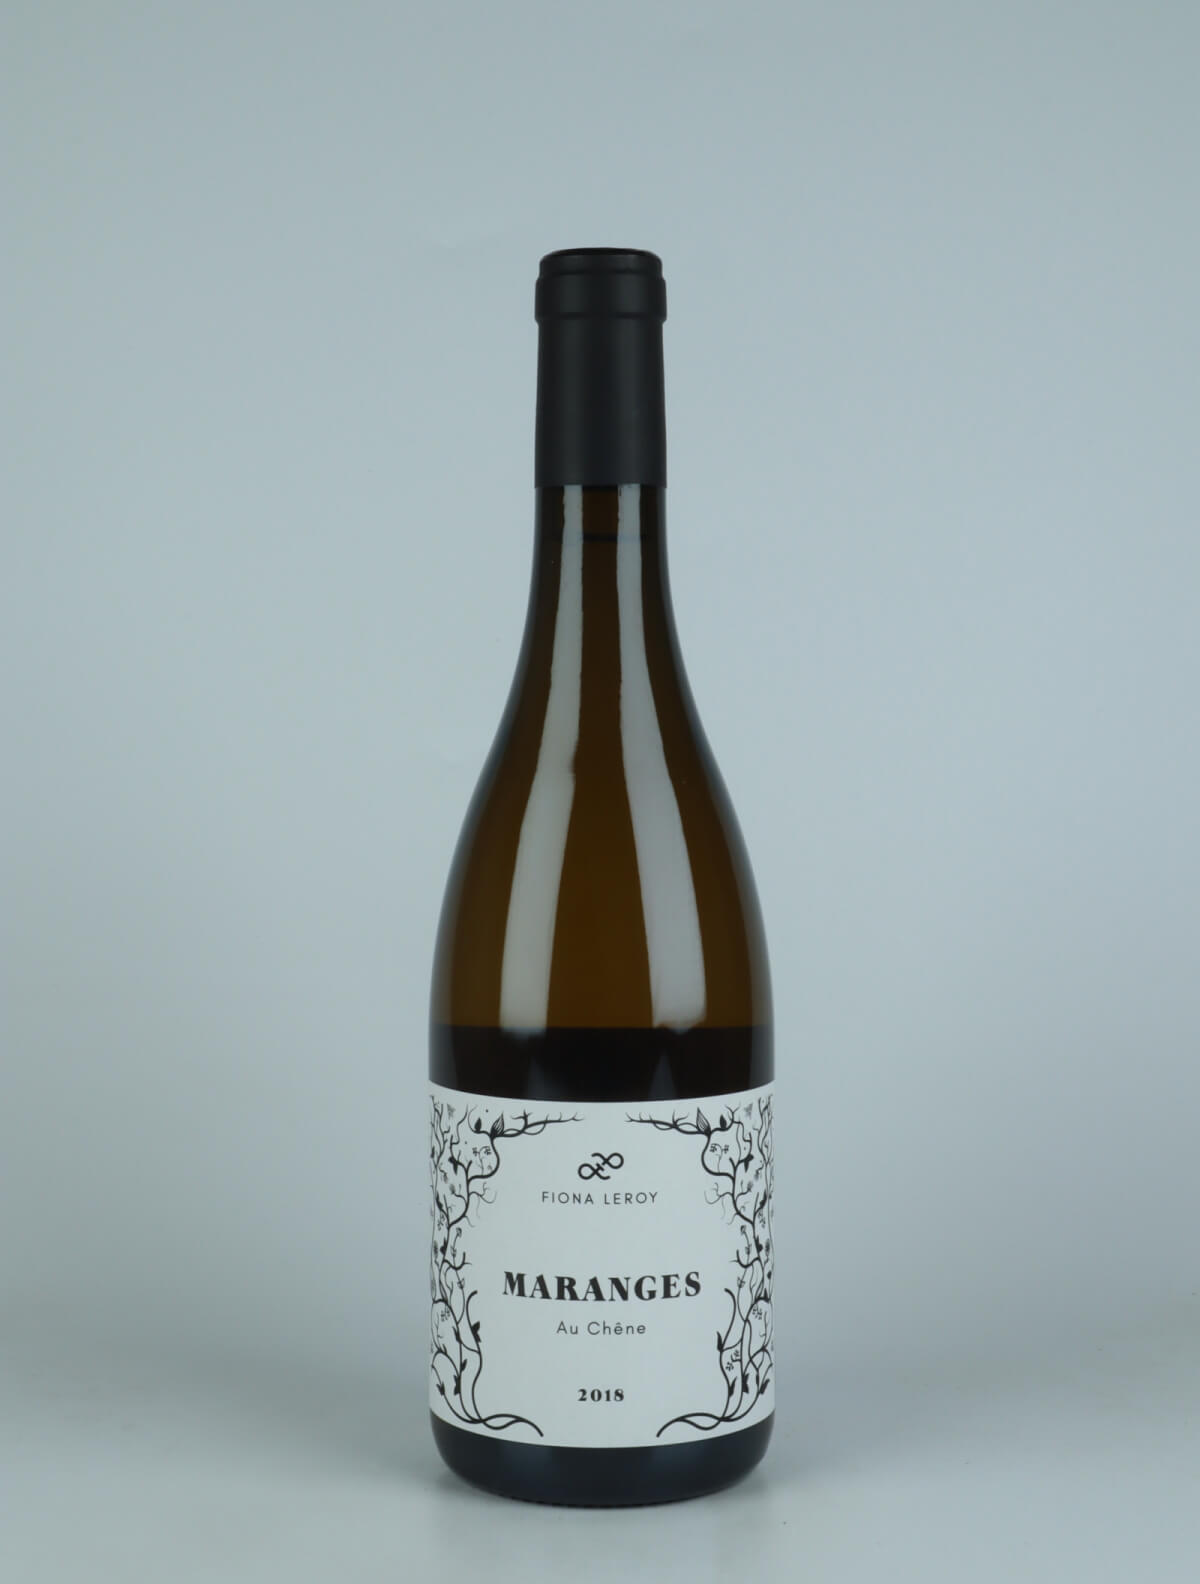 A bottle 2018 Maranges Blanc - Au Chêne White wine from Fiona Leroy, Burgundy in France